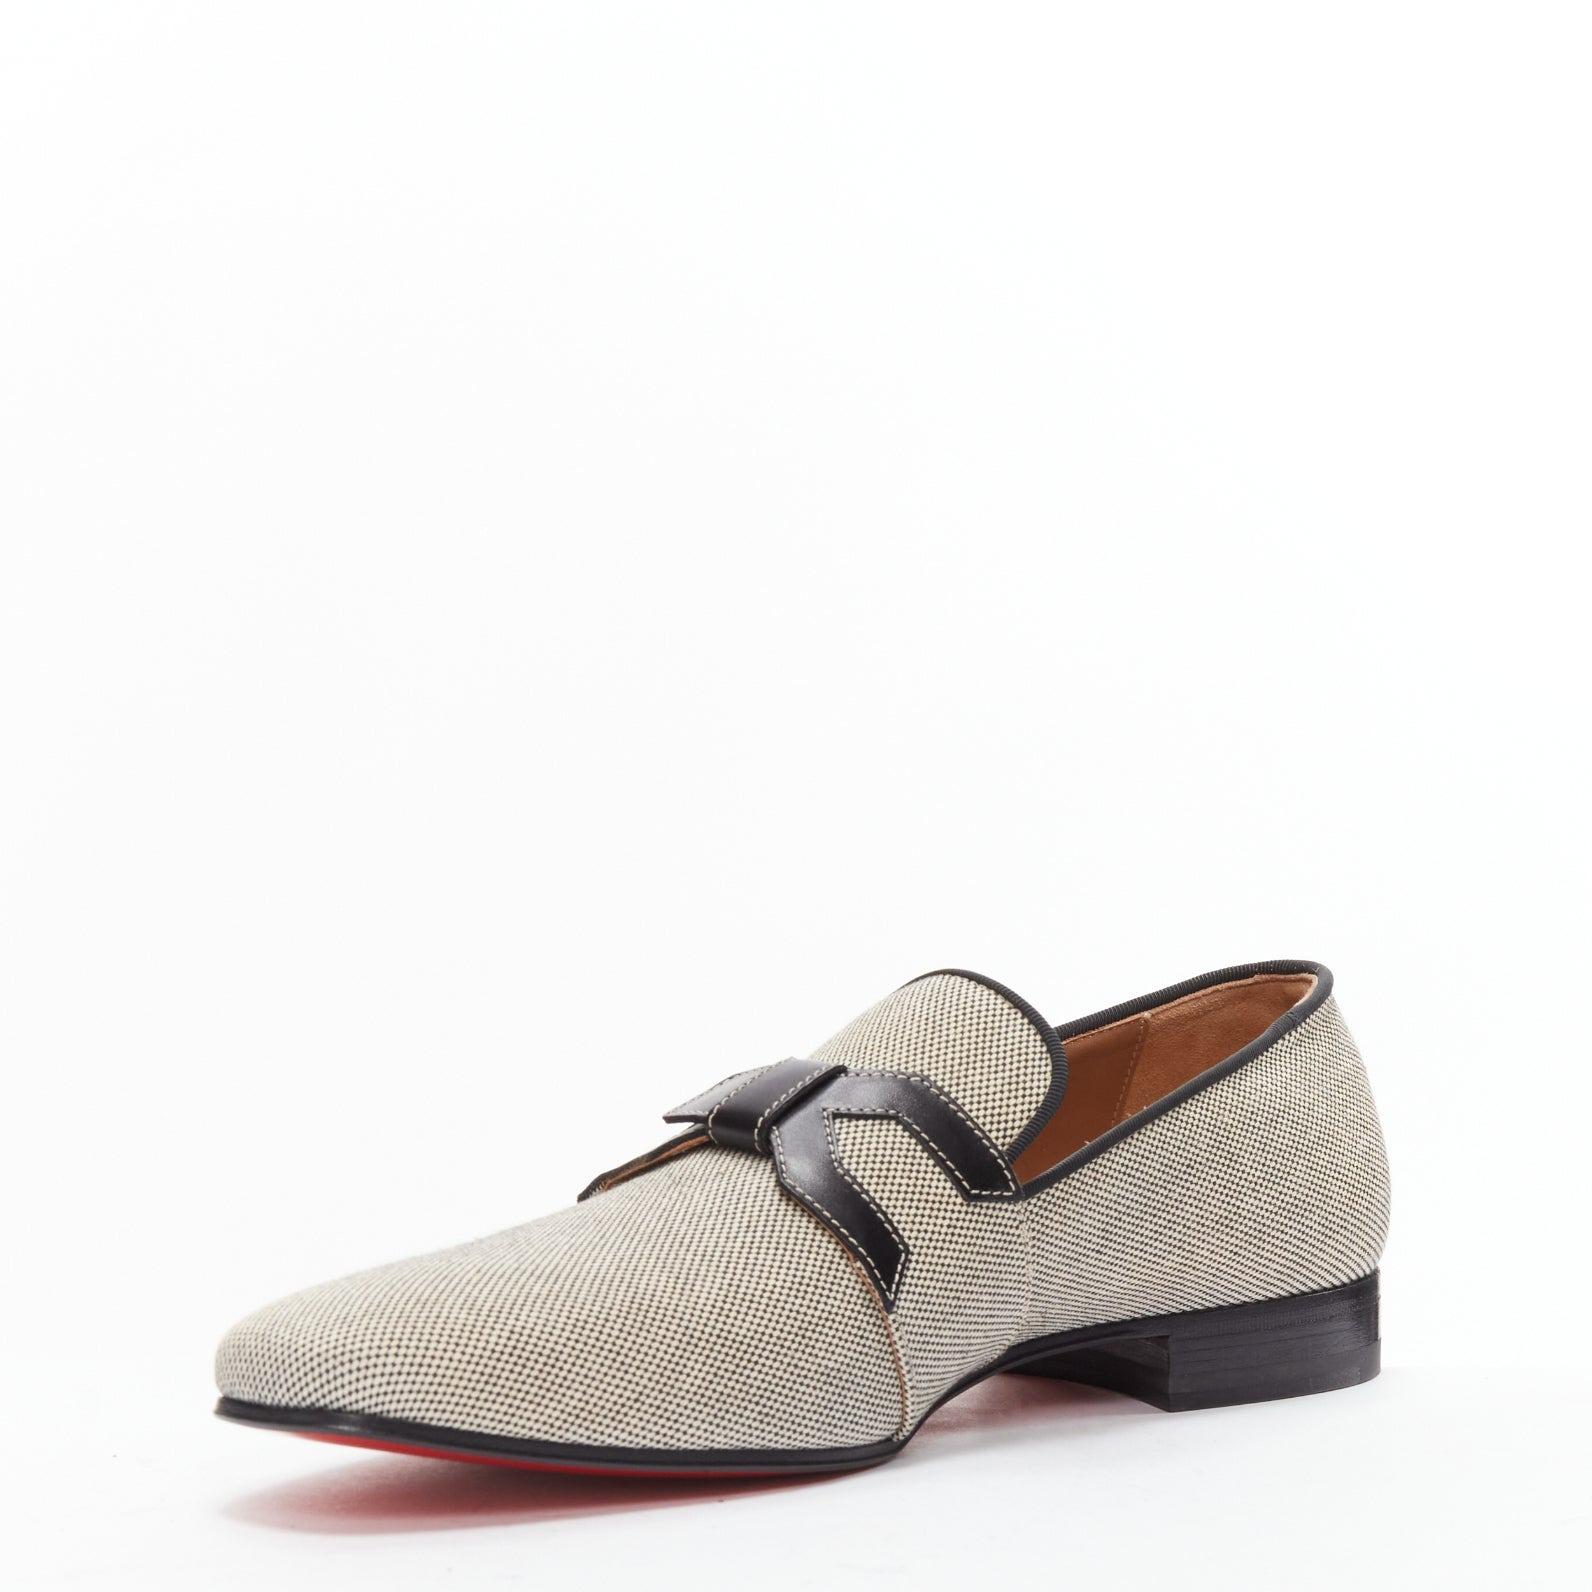 Men's CHRISTIAN LOUBOUTIN Francis black leather grey fabric loafer dress shoes EU42